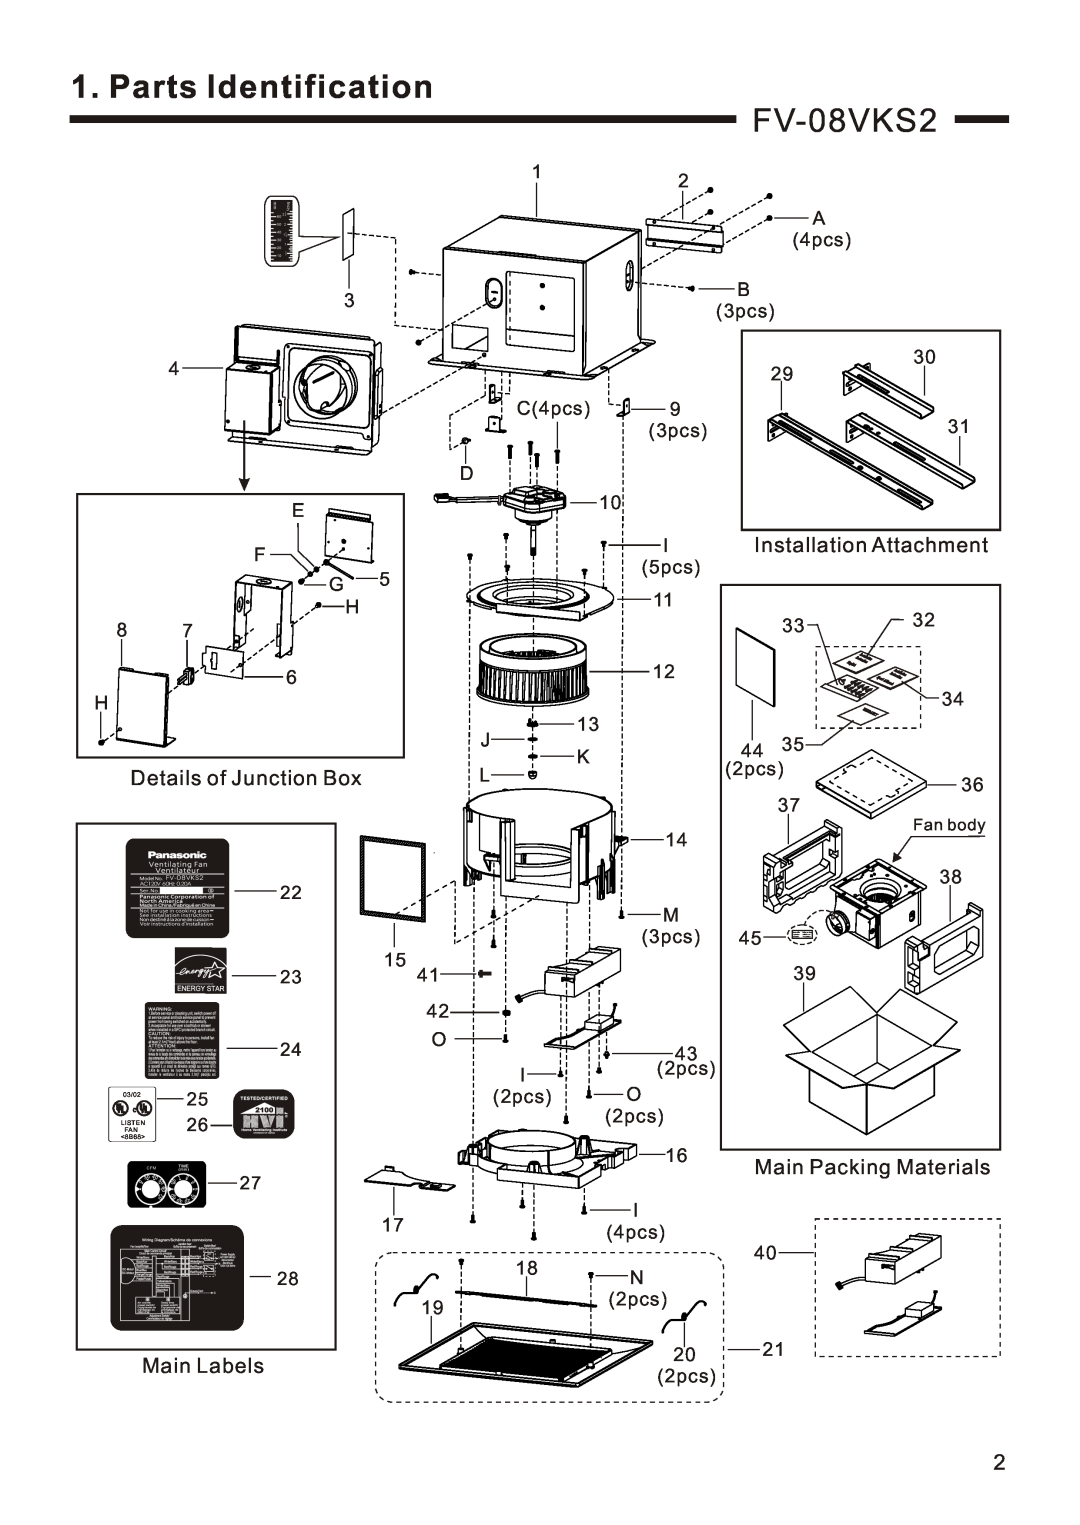 Panasonic FV-08VKS2 Parts Identification, Installation Attachment, Details of Junction Box, Main Packing Materials, 4pcs 